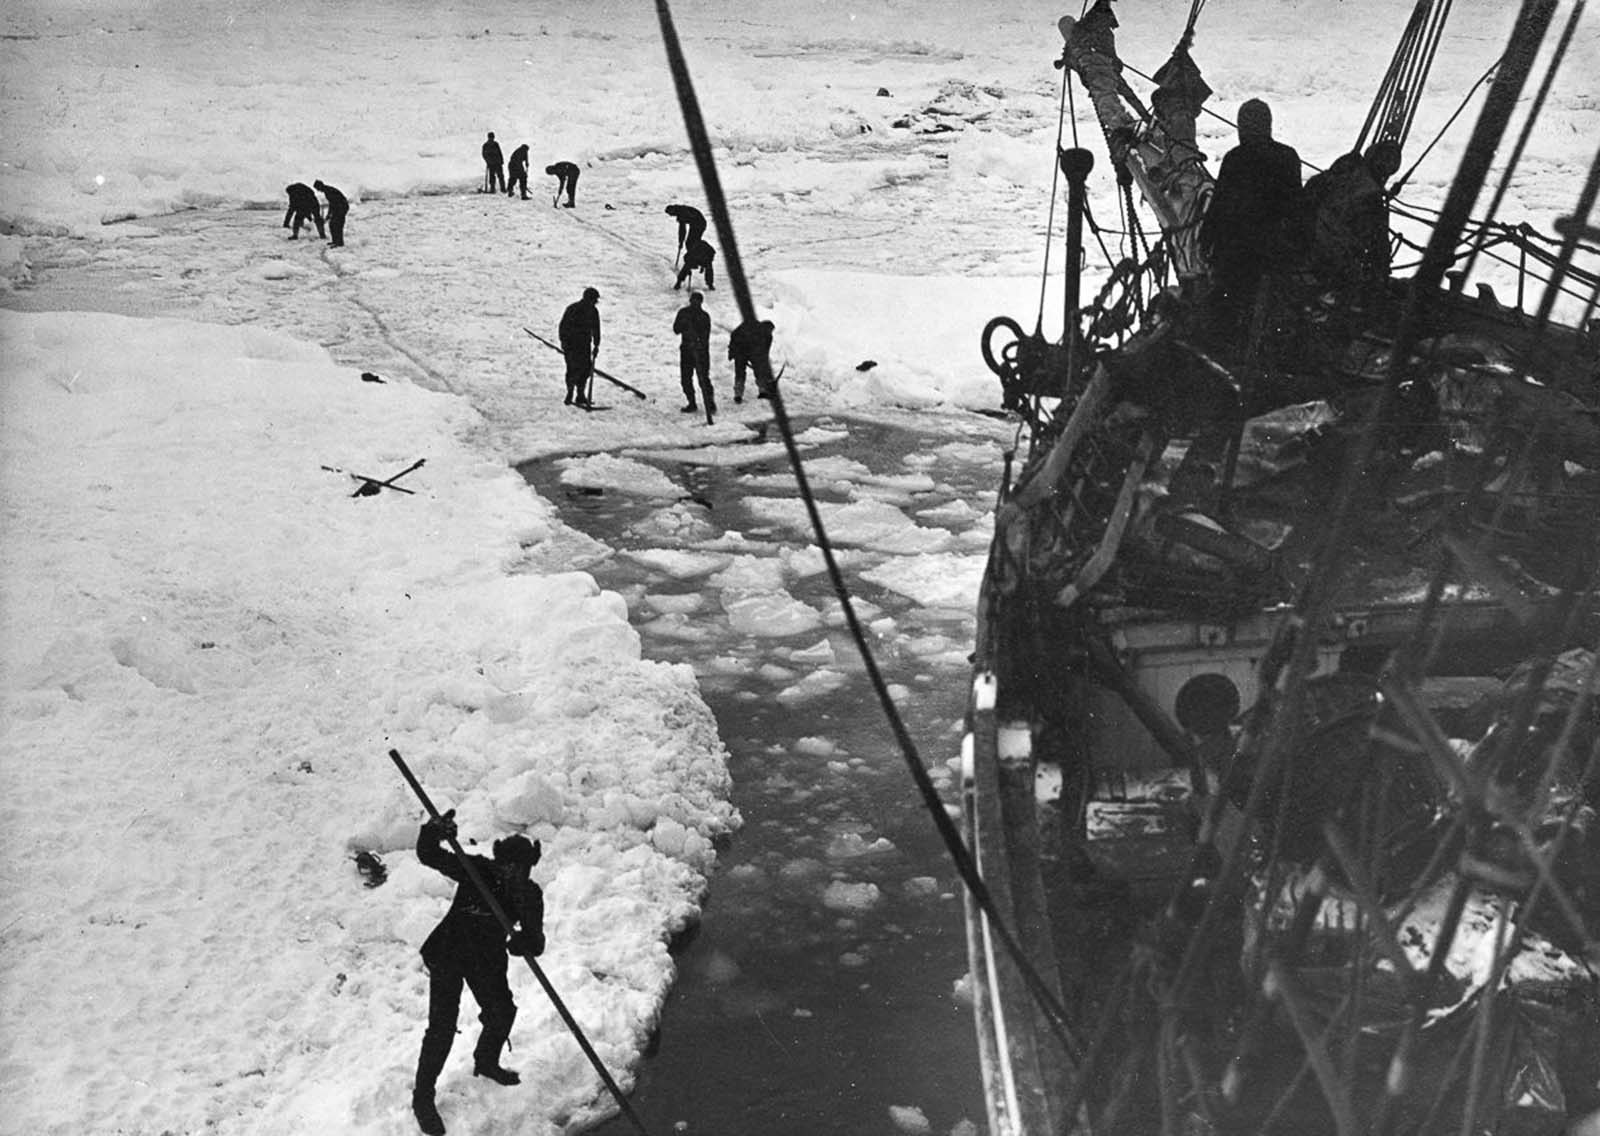 Shackleton Antarctica endurance photographs